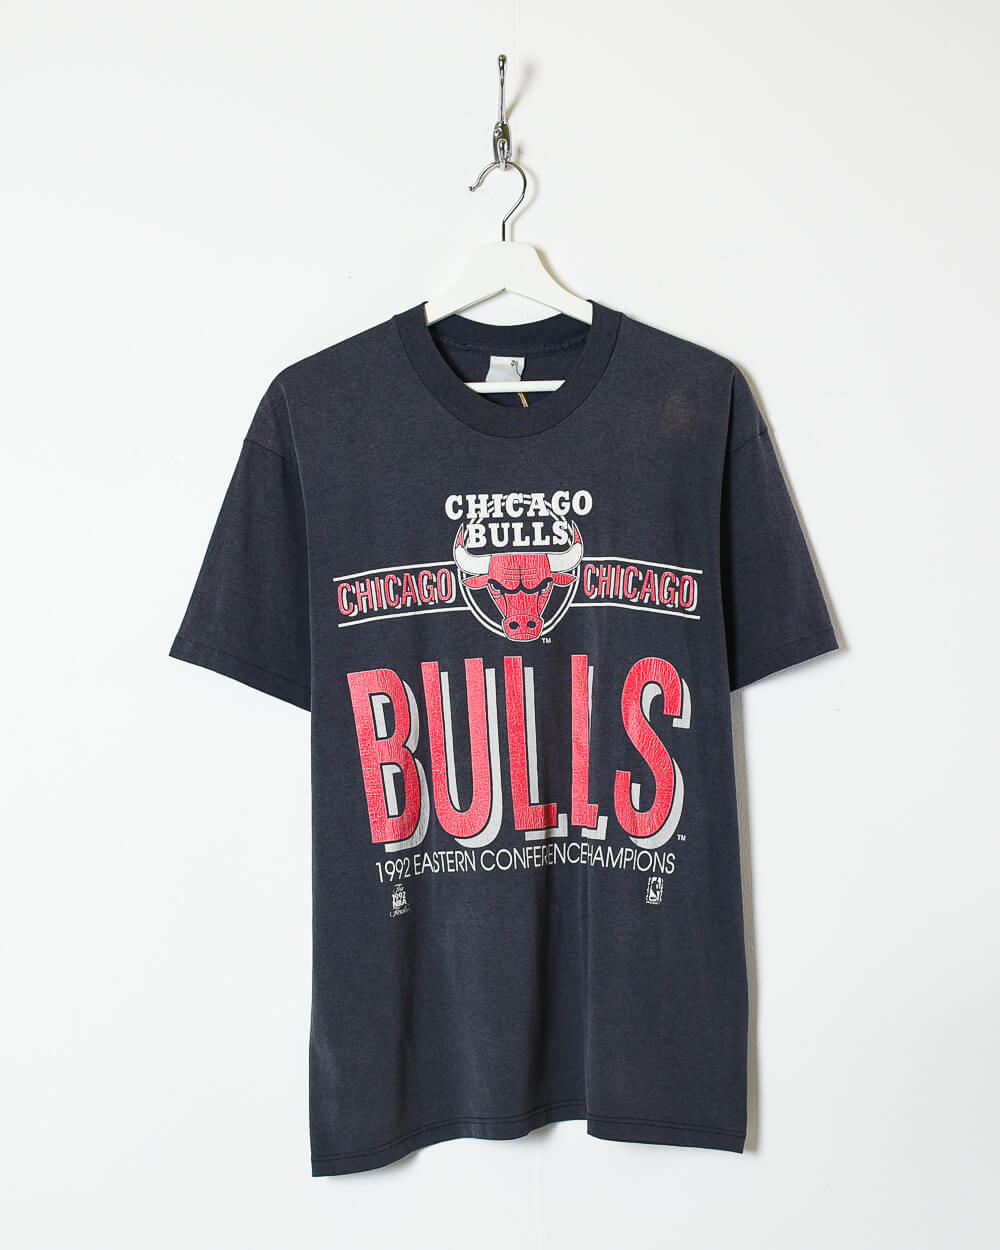 Black Chicago Bulls T-Shirt - Large